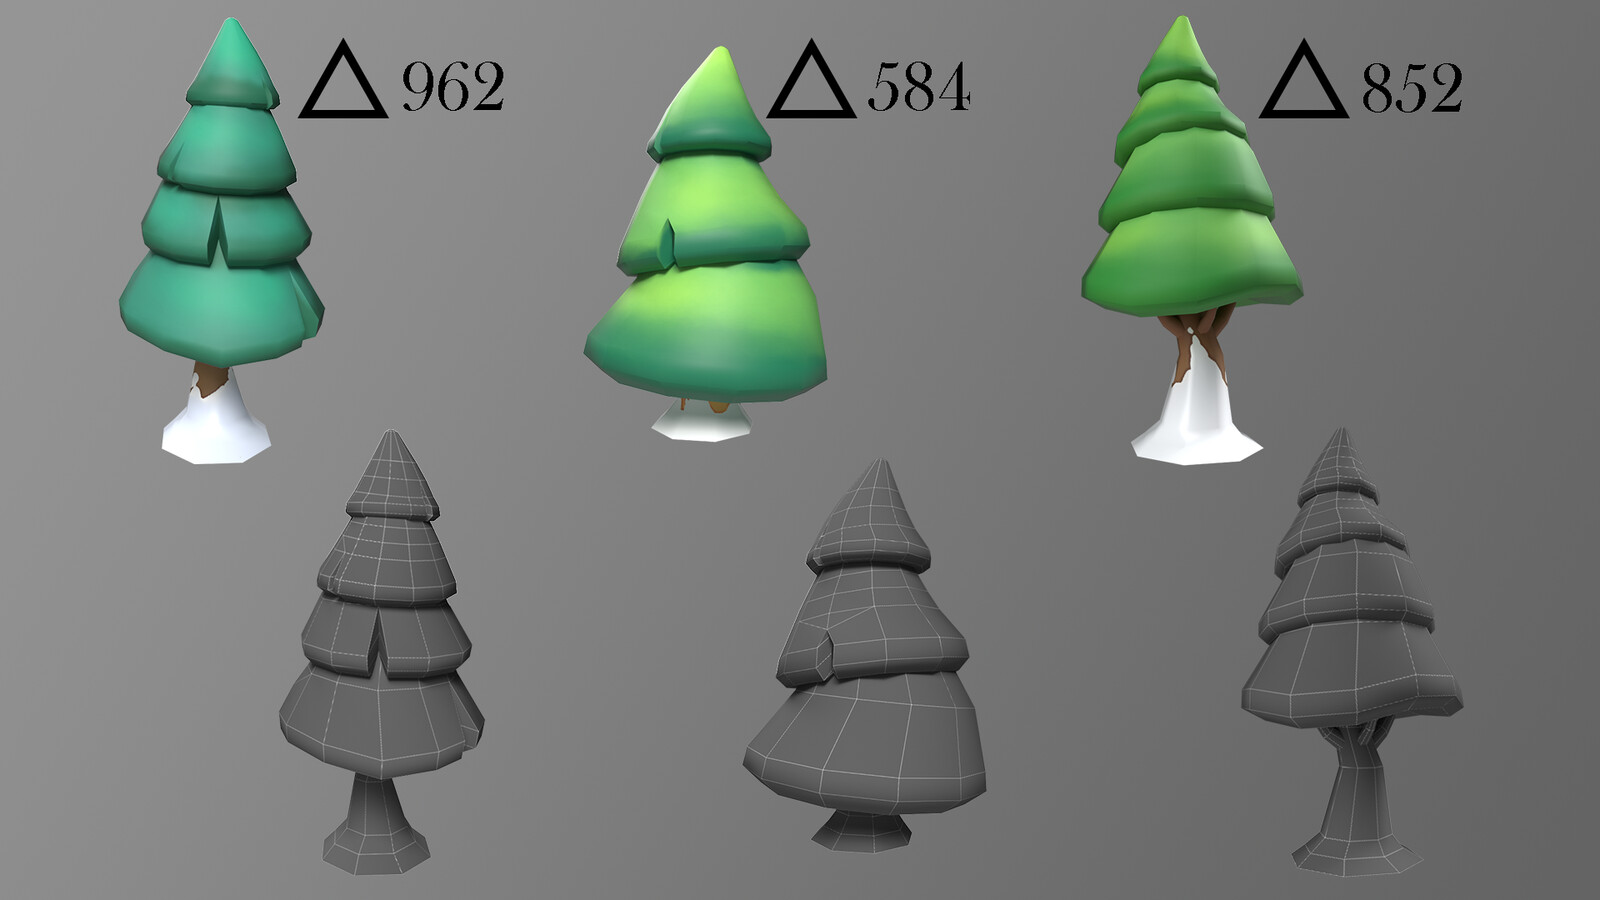 3 versions of fir trees